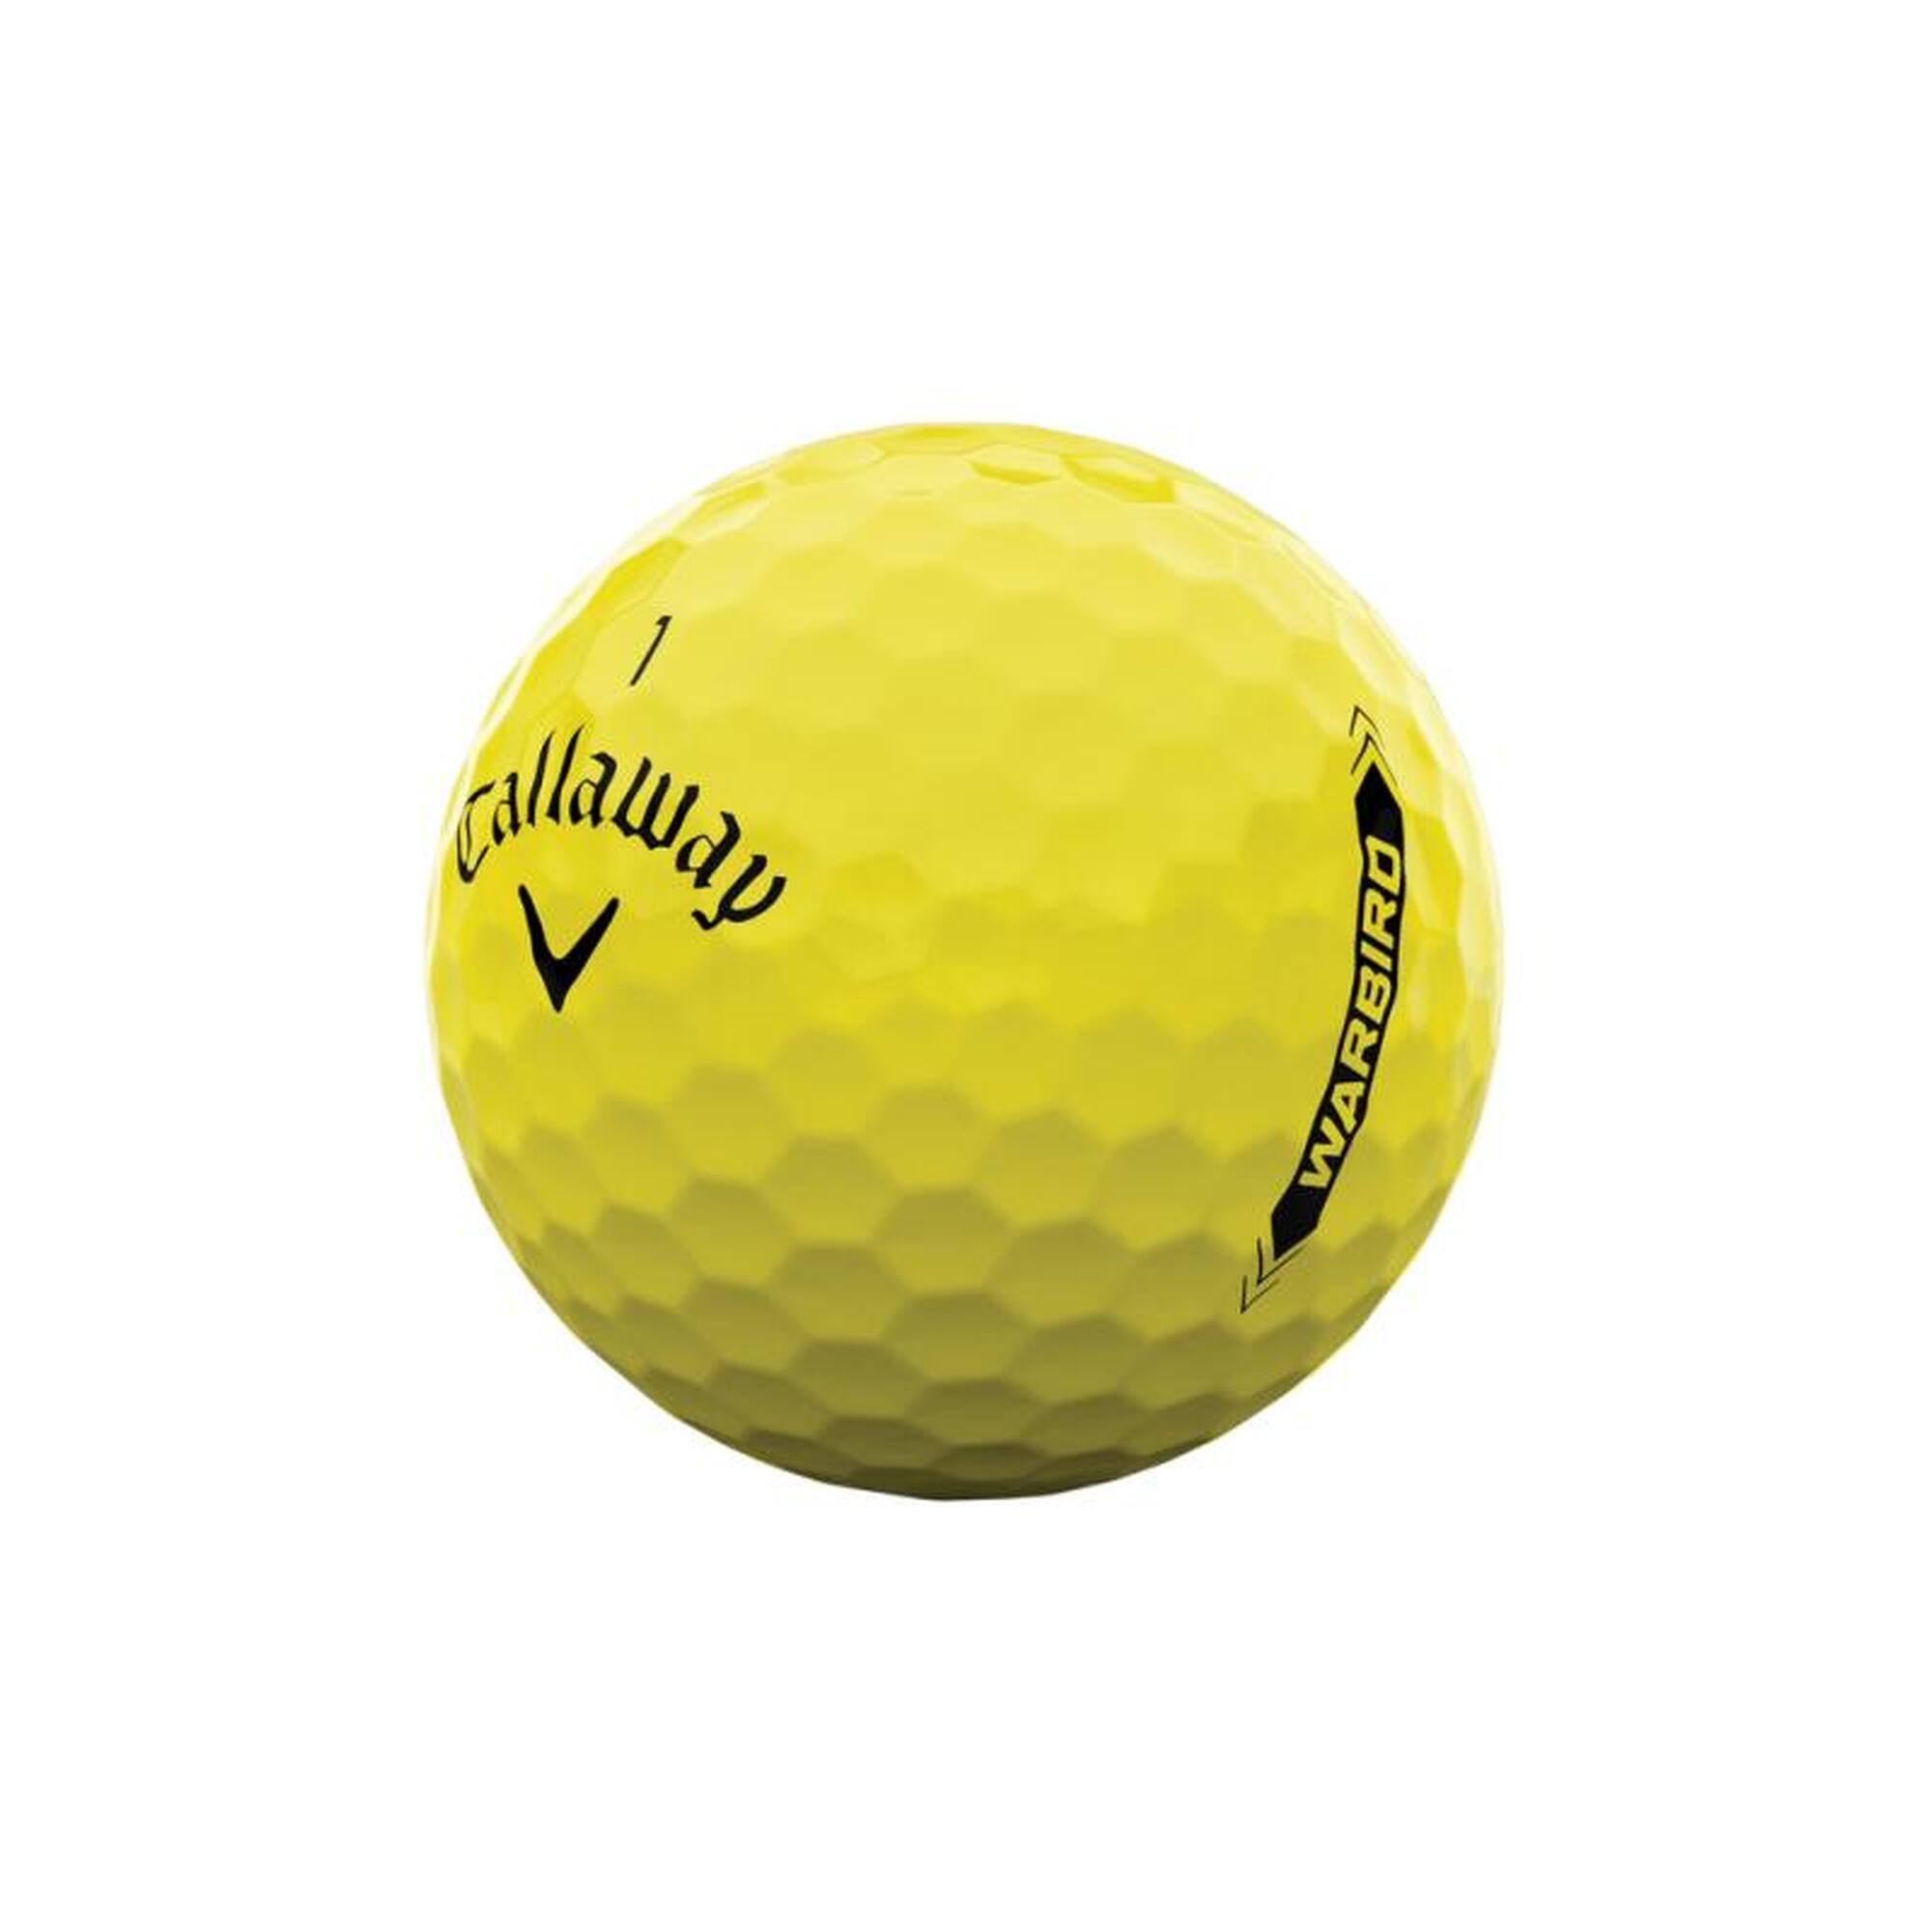 Callaway Warbird Geel Golfballen